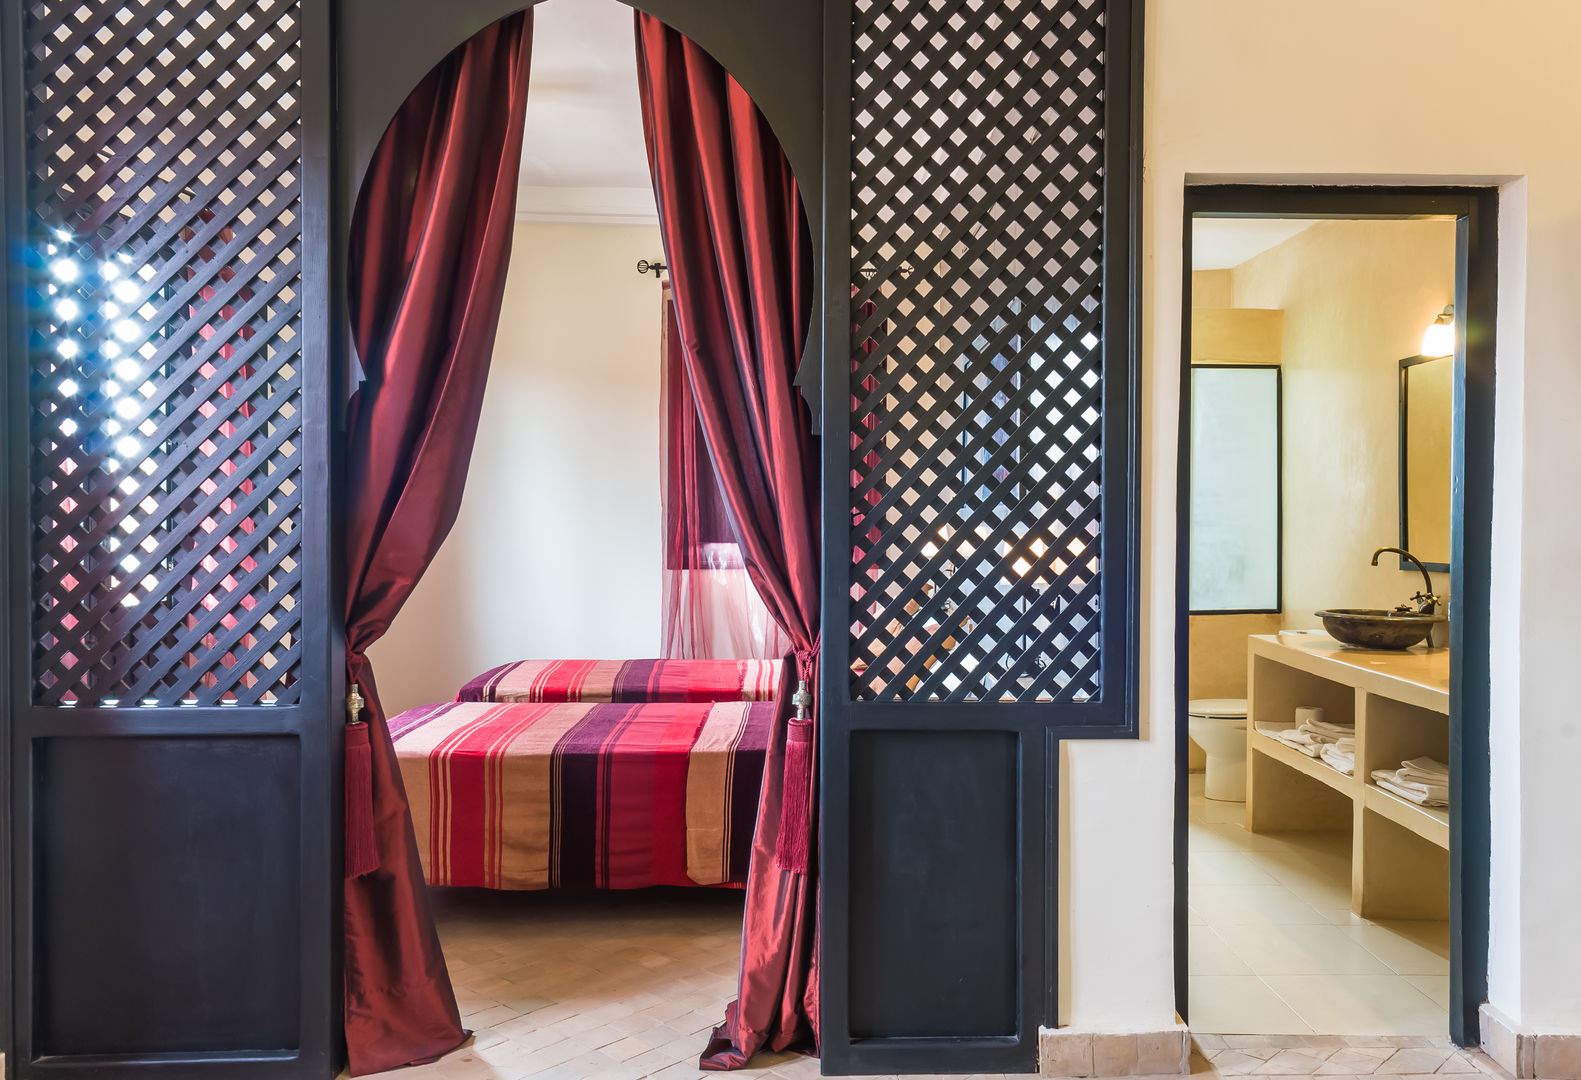 Hotel en Marruecos, Space Maker Studio Space Maker Studio Espaços comerciais